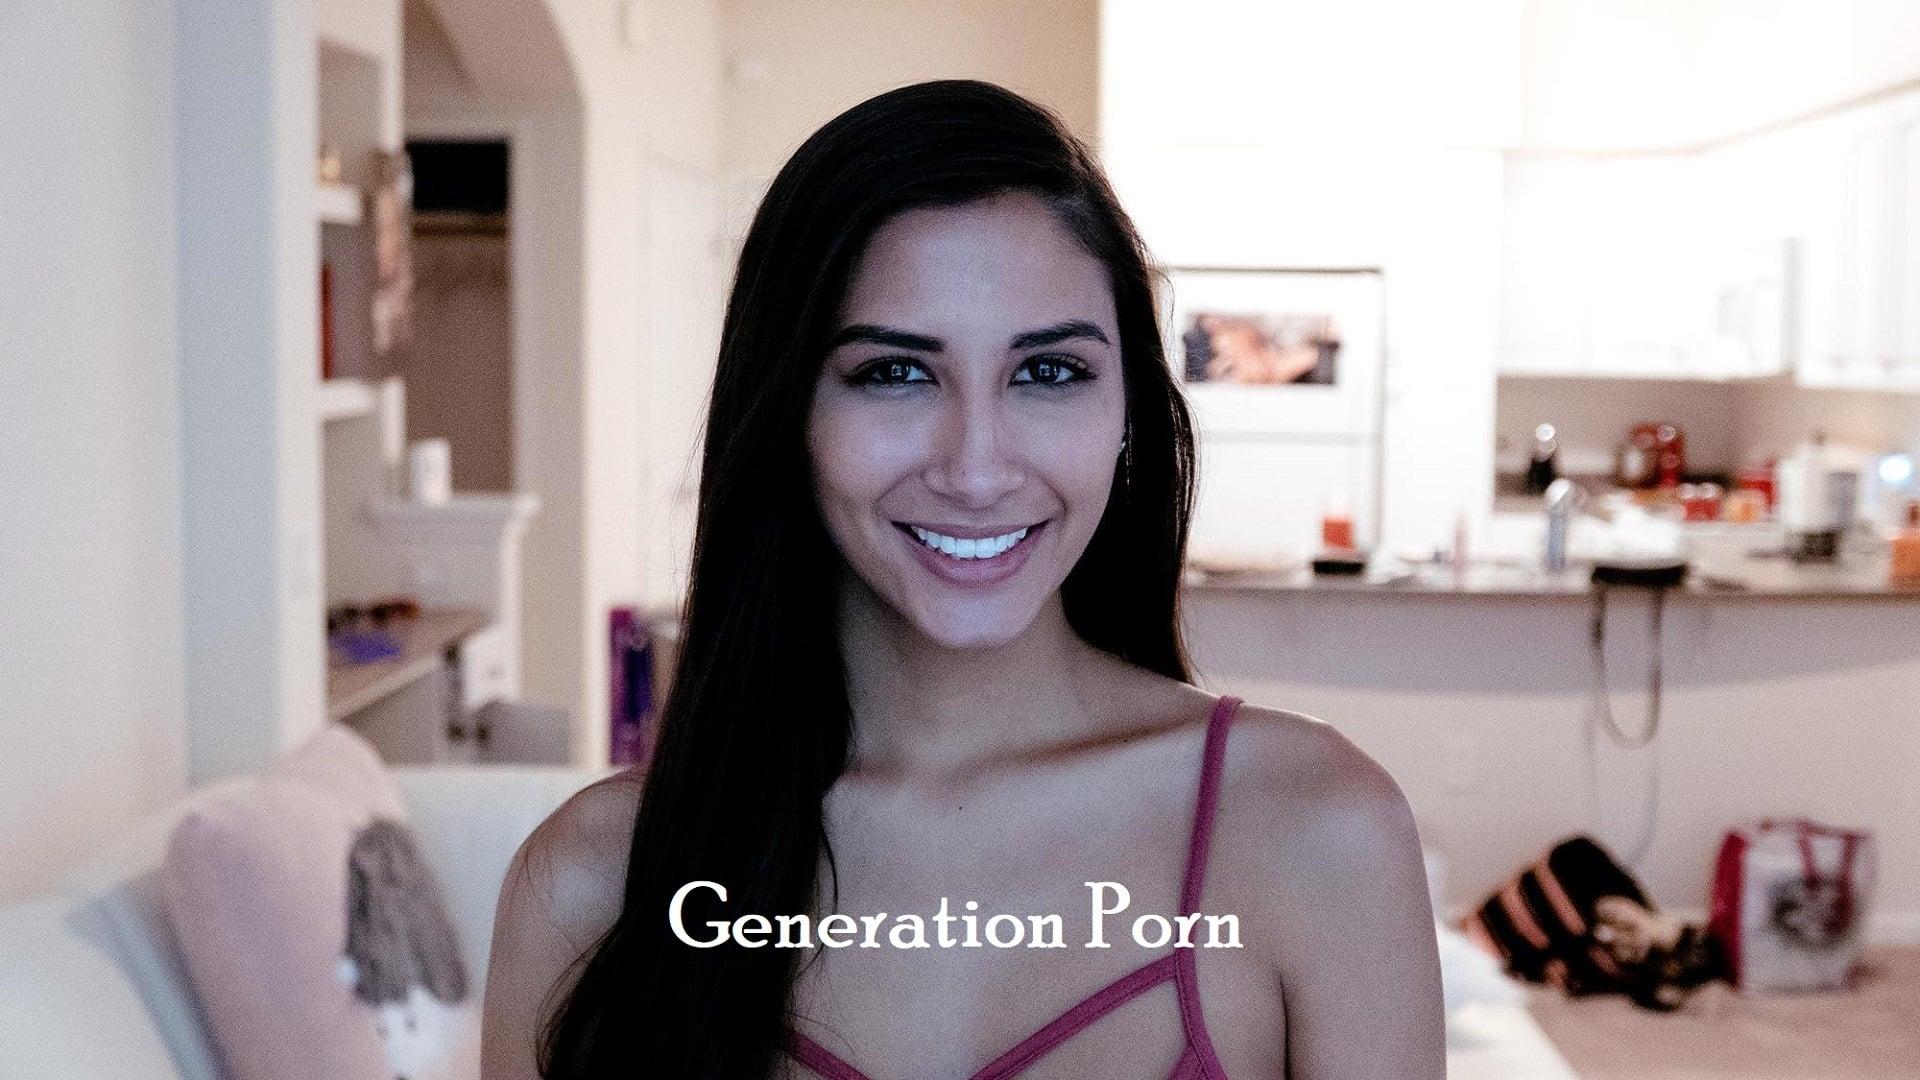 Generation Porn backdrop